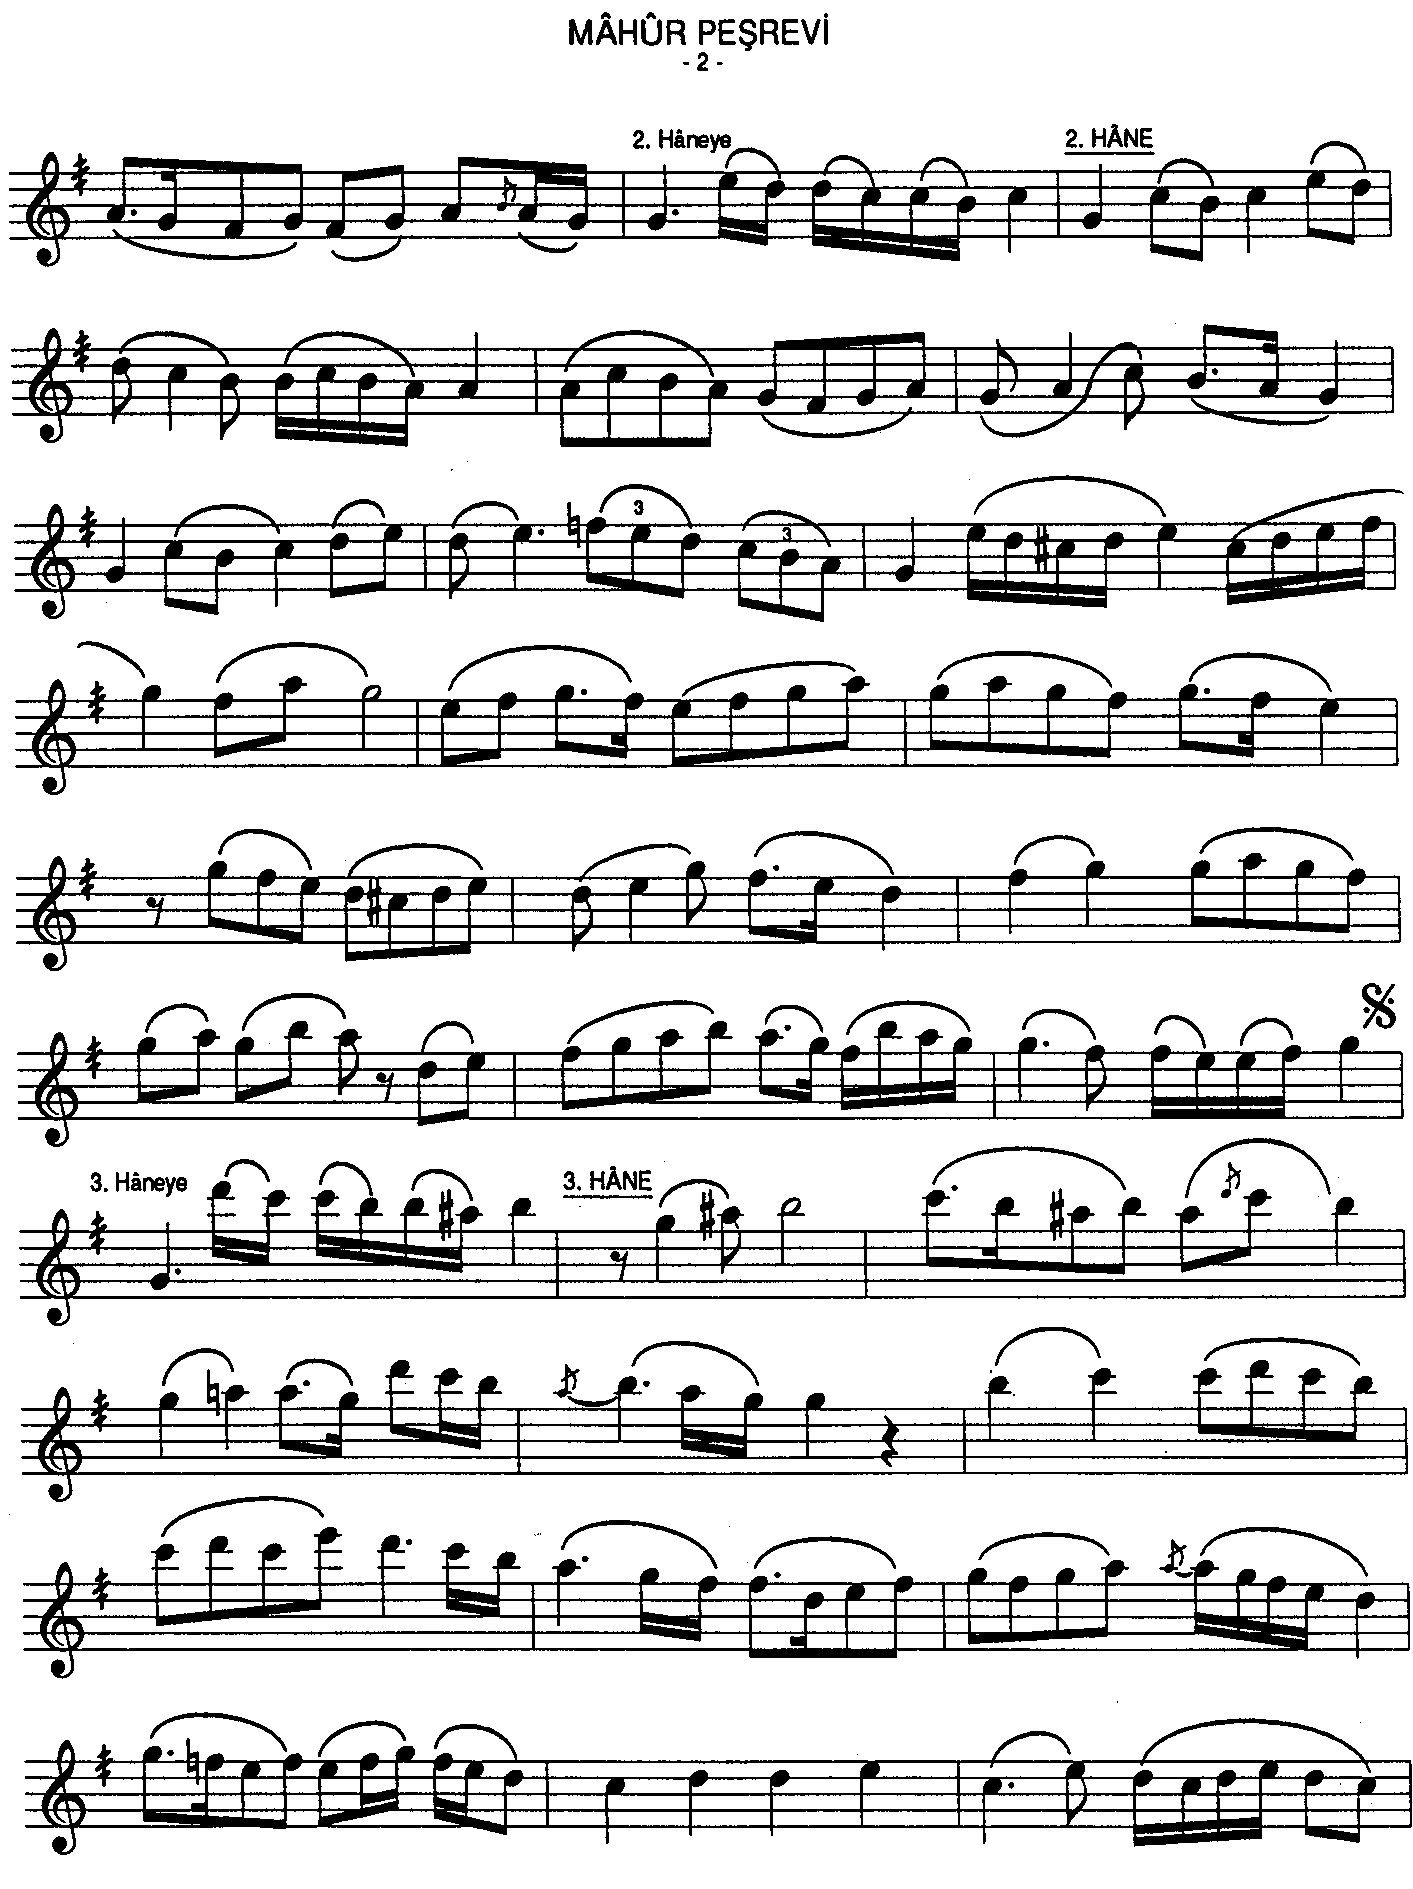 Mâhûr - Peşrev - Tanburi Cemil Bey - Sayfa 2